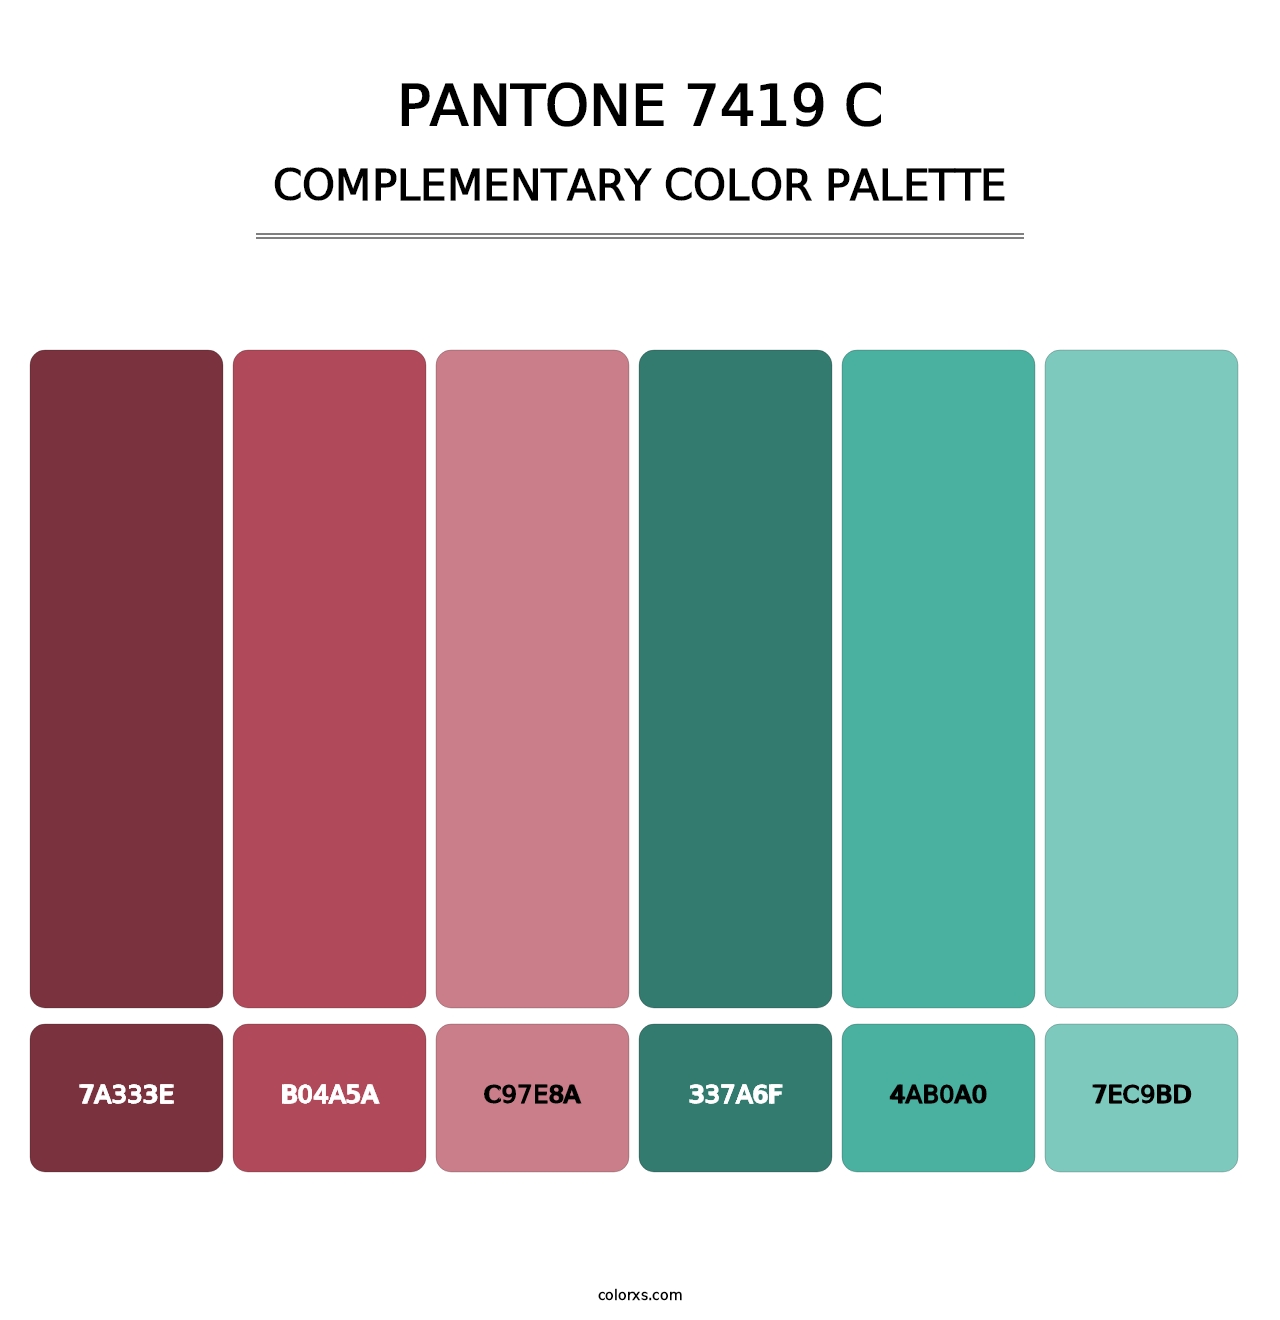 PANTONE 7419 C - Complementary Color Palette